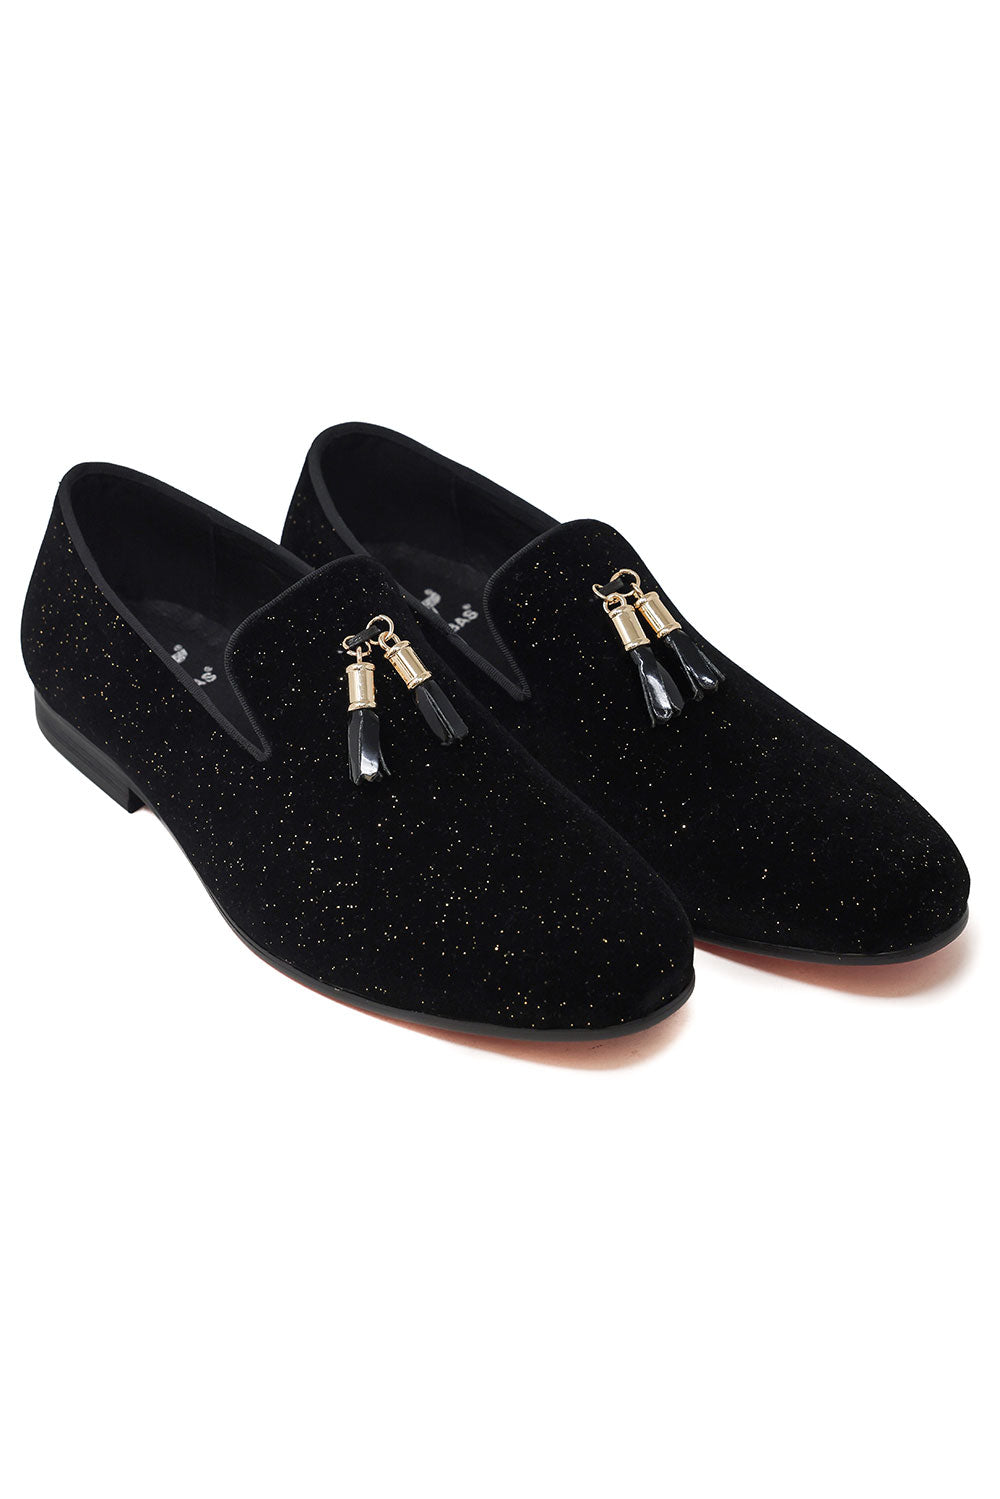 BARABAS Men's Glittery Shiny Luxury Tassel Loafer Shoes 2SH3106 Black Gold